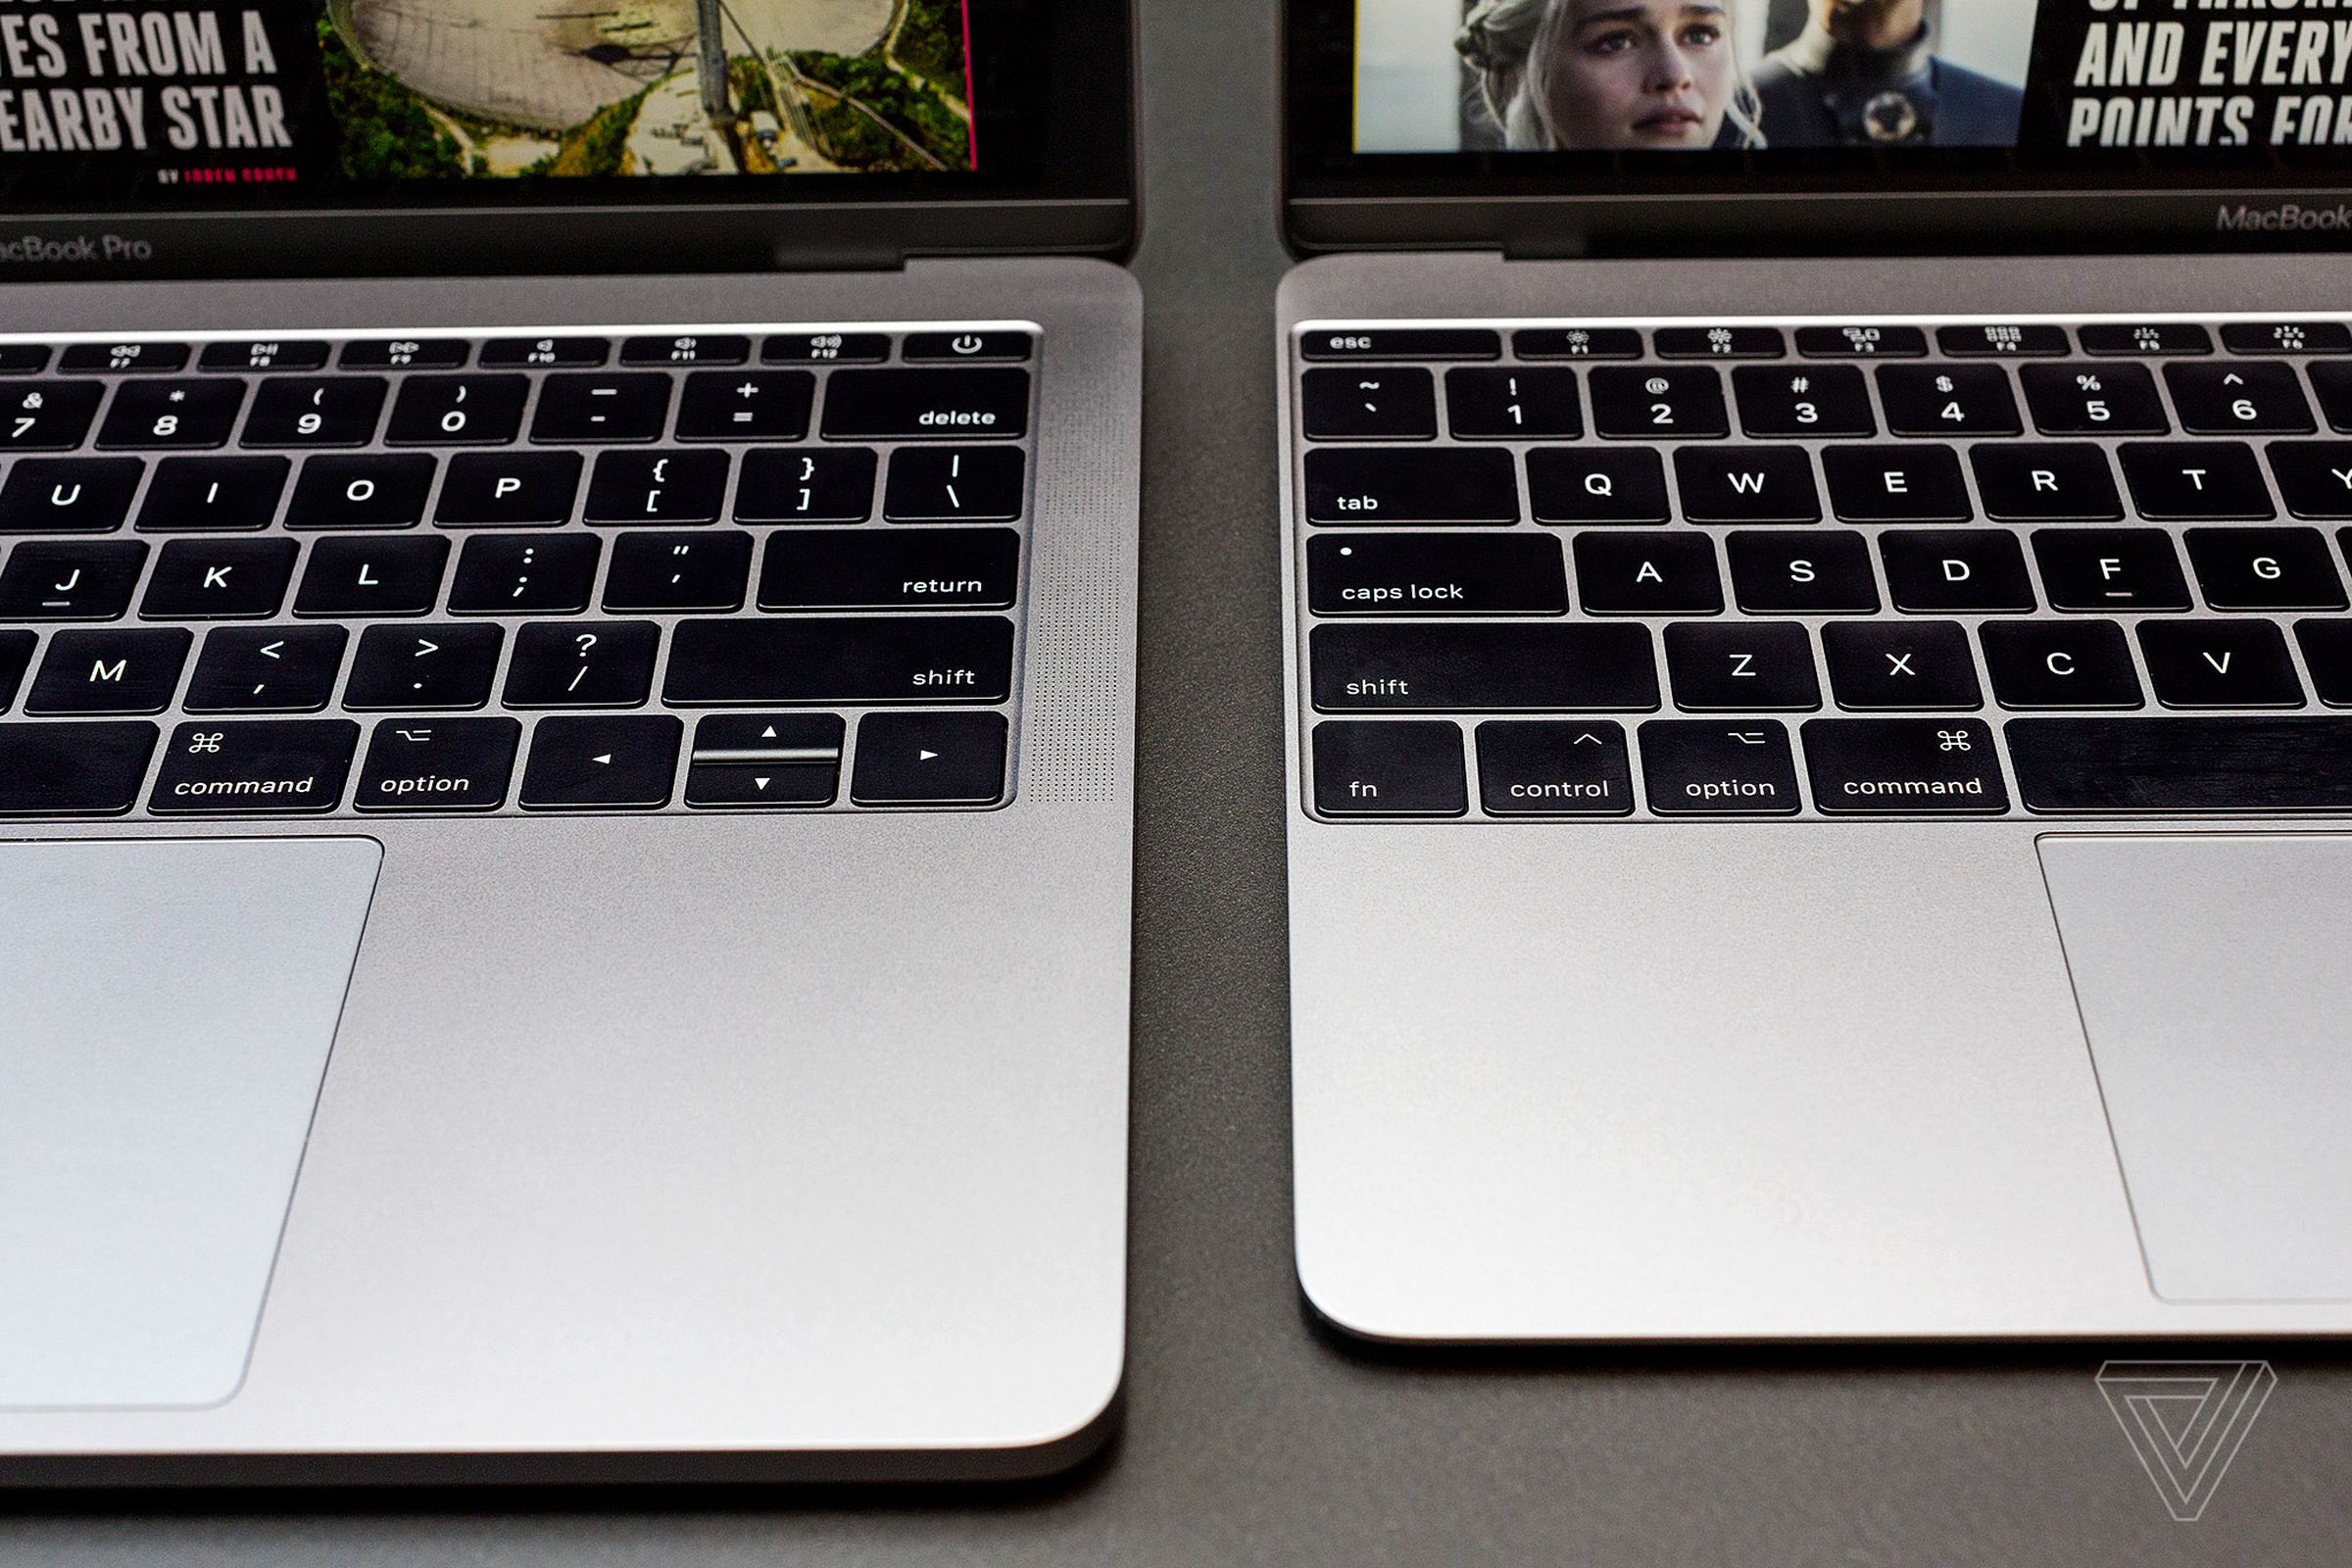 MacBook and MacBook Pro 2017 keyboards